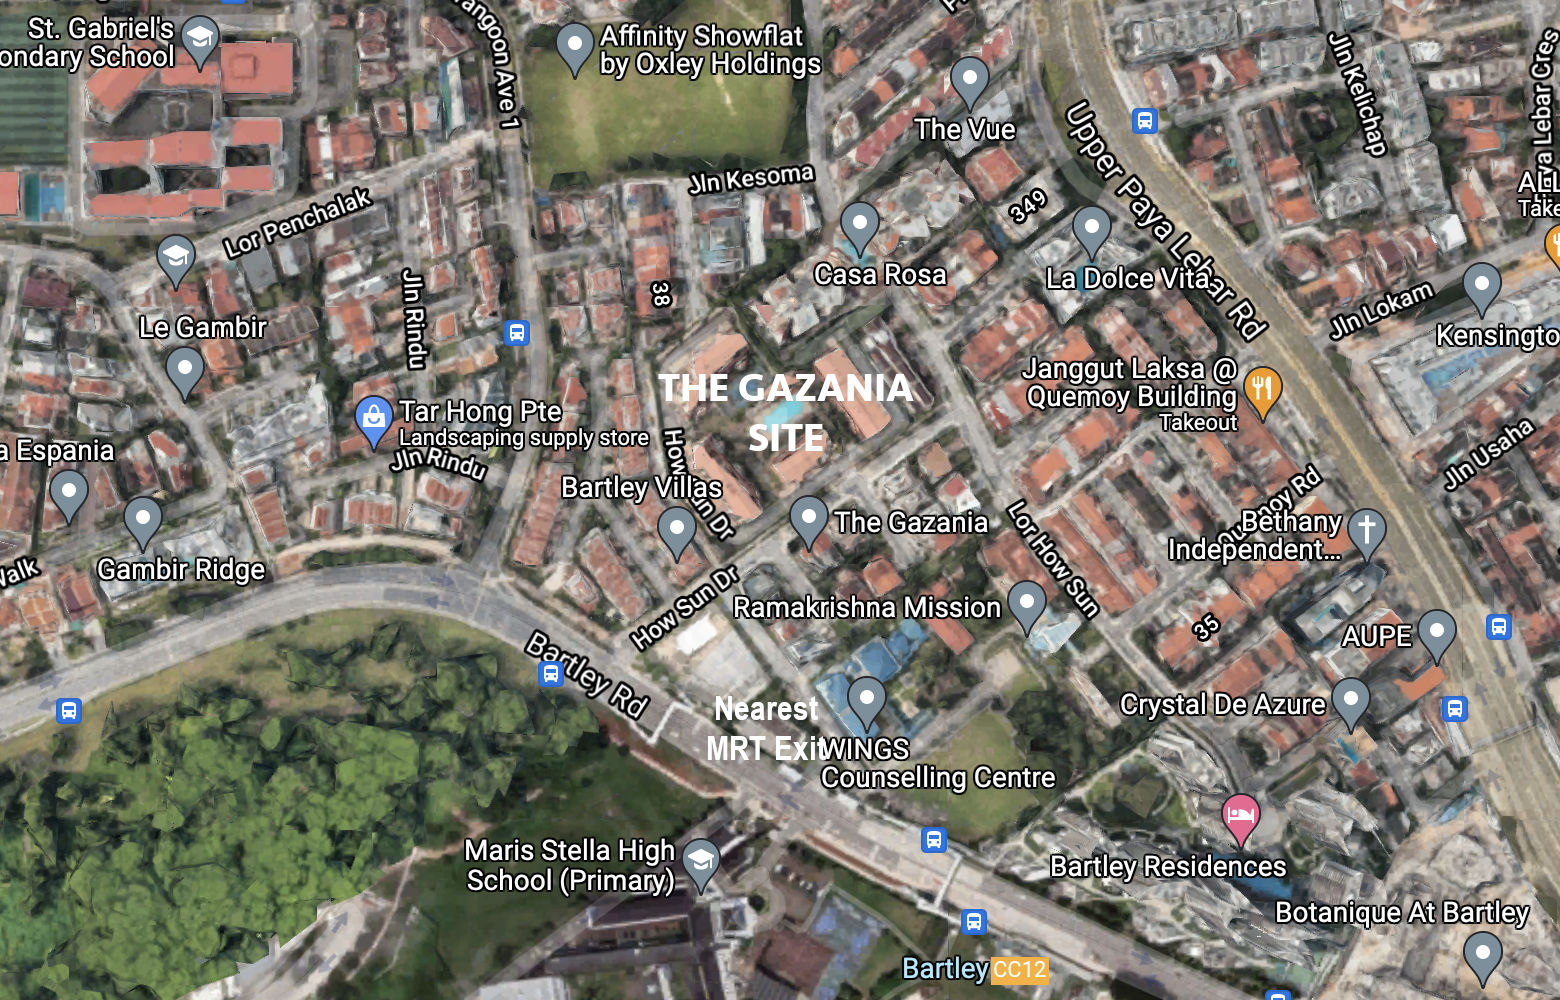 The Gazania Site Location Near Bartley MRT Station . Source: Google Maps